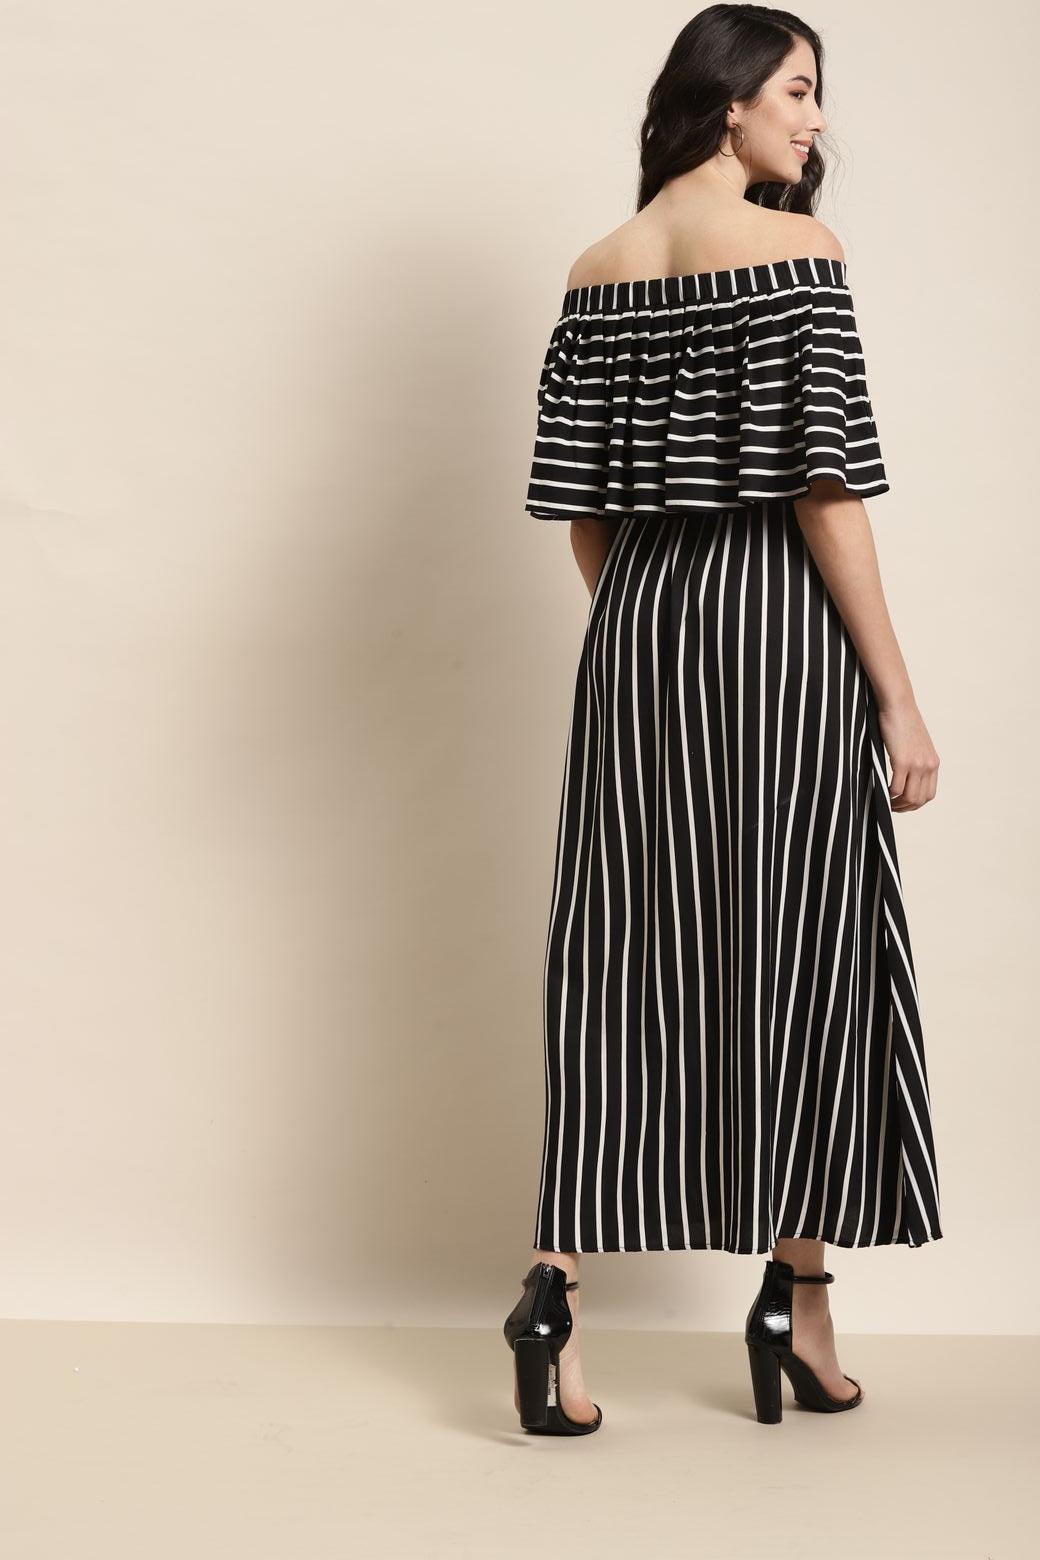 Qurvii Black stripe dress - Qurvii India